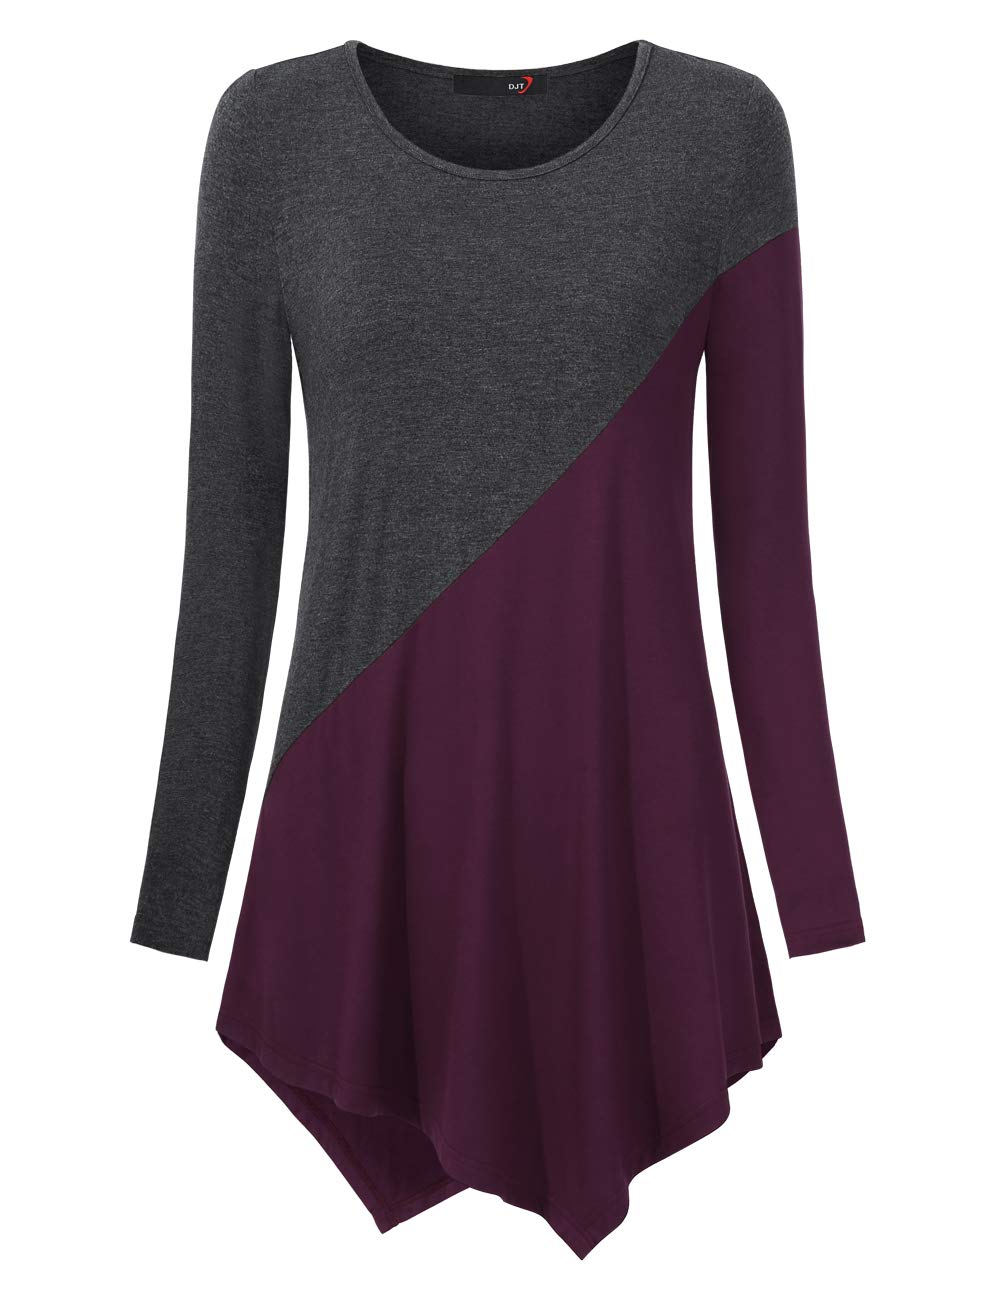 DJT Long Sleeve Tunic Shirts Scoop Neck Stretch Casual Heather Grey Purple Women's Hanky Hem Color Block Fall T Shirt Tops